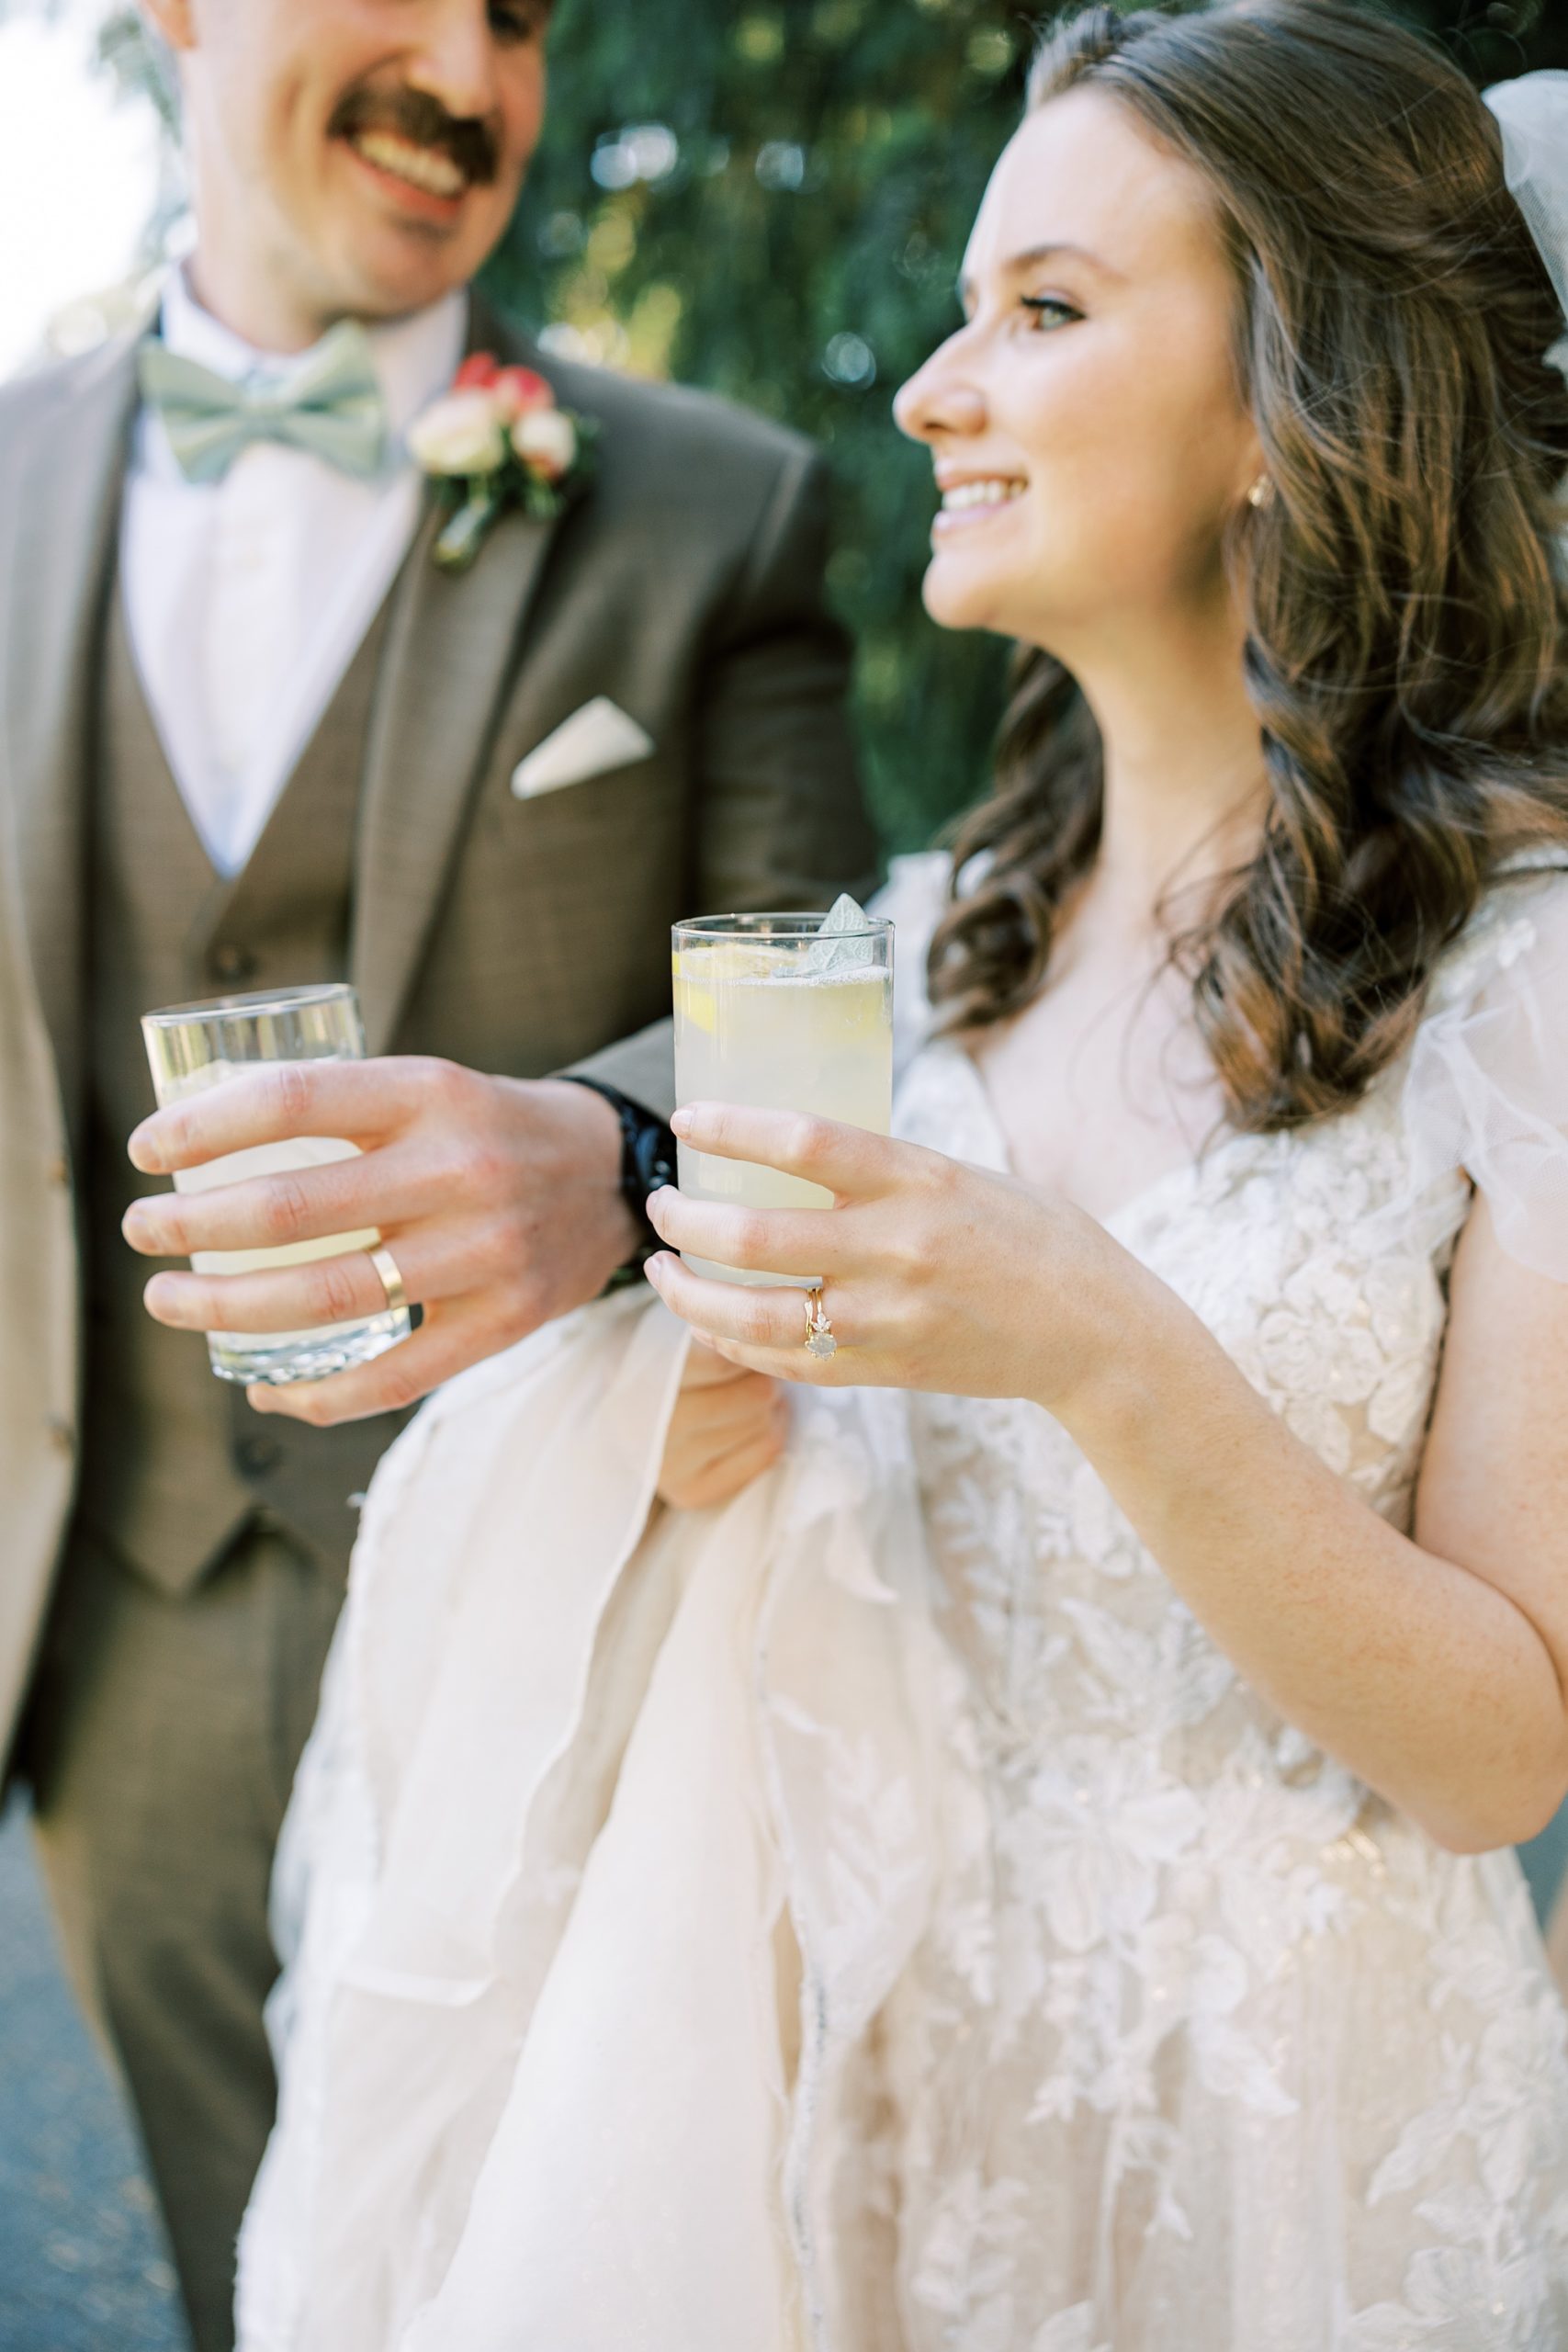 newlyweds hold glasses of lemonade showing off wedding rings 